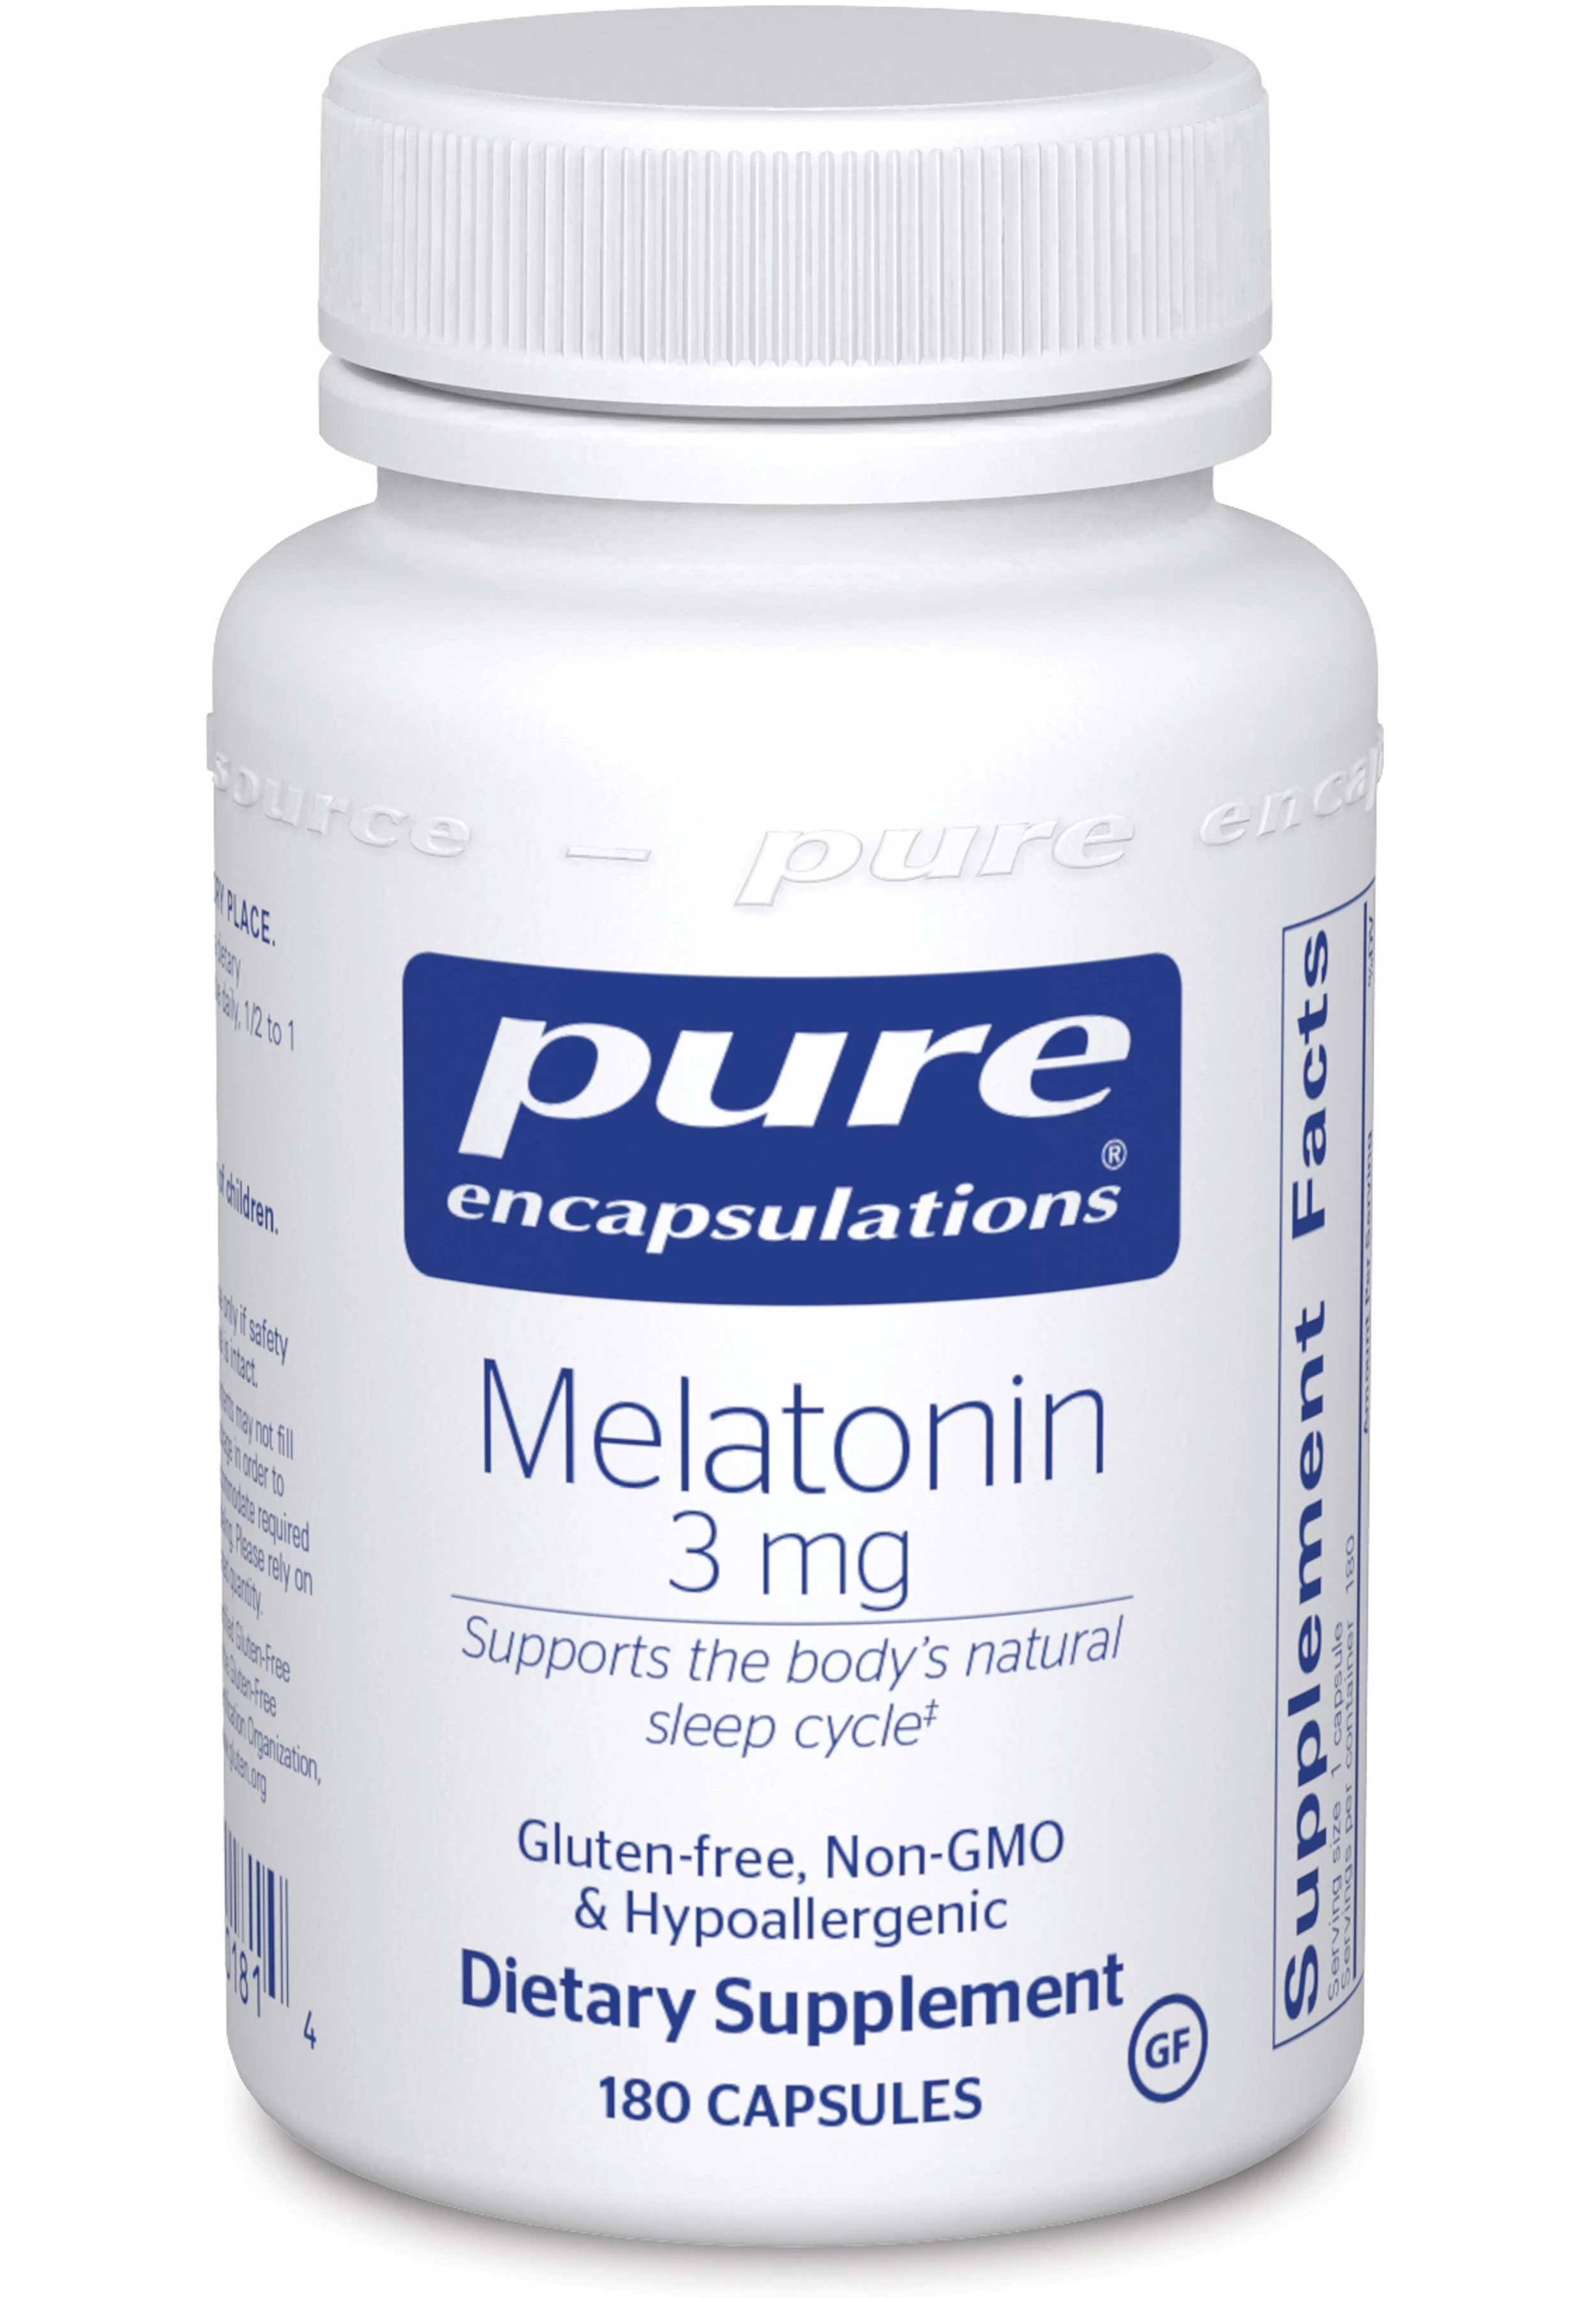 Pure Encapsulations Melatonin Vegetable Capsules Supplement - 3mg, 180ct